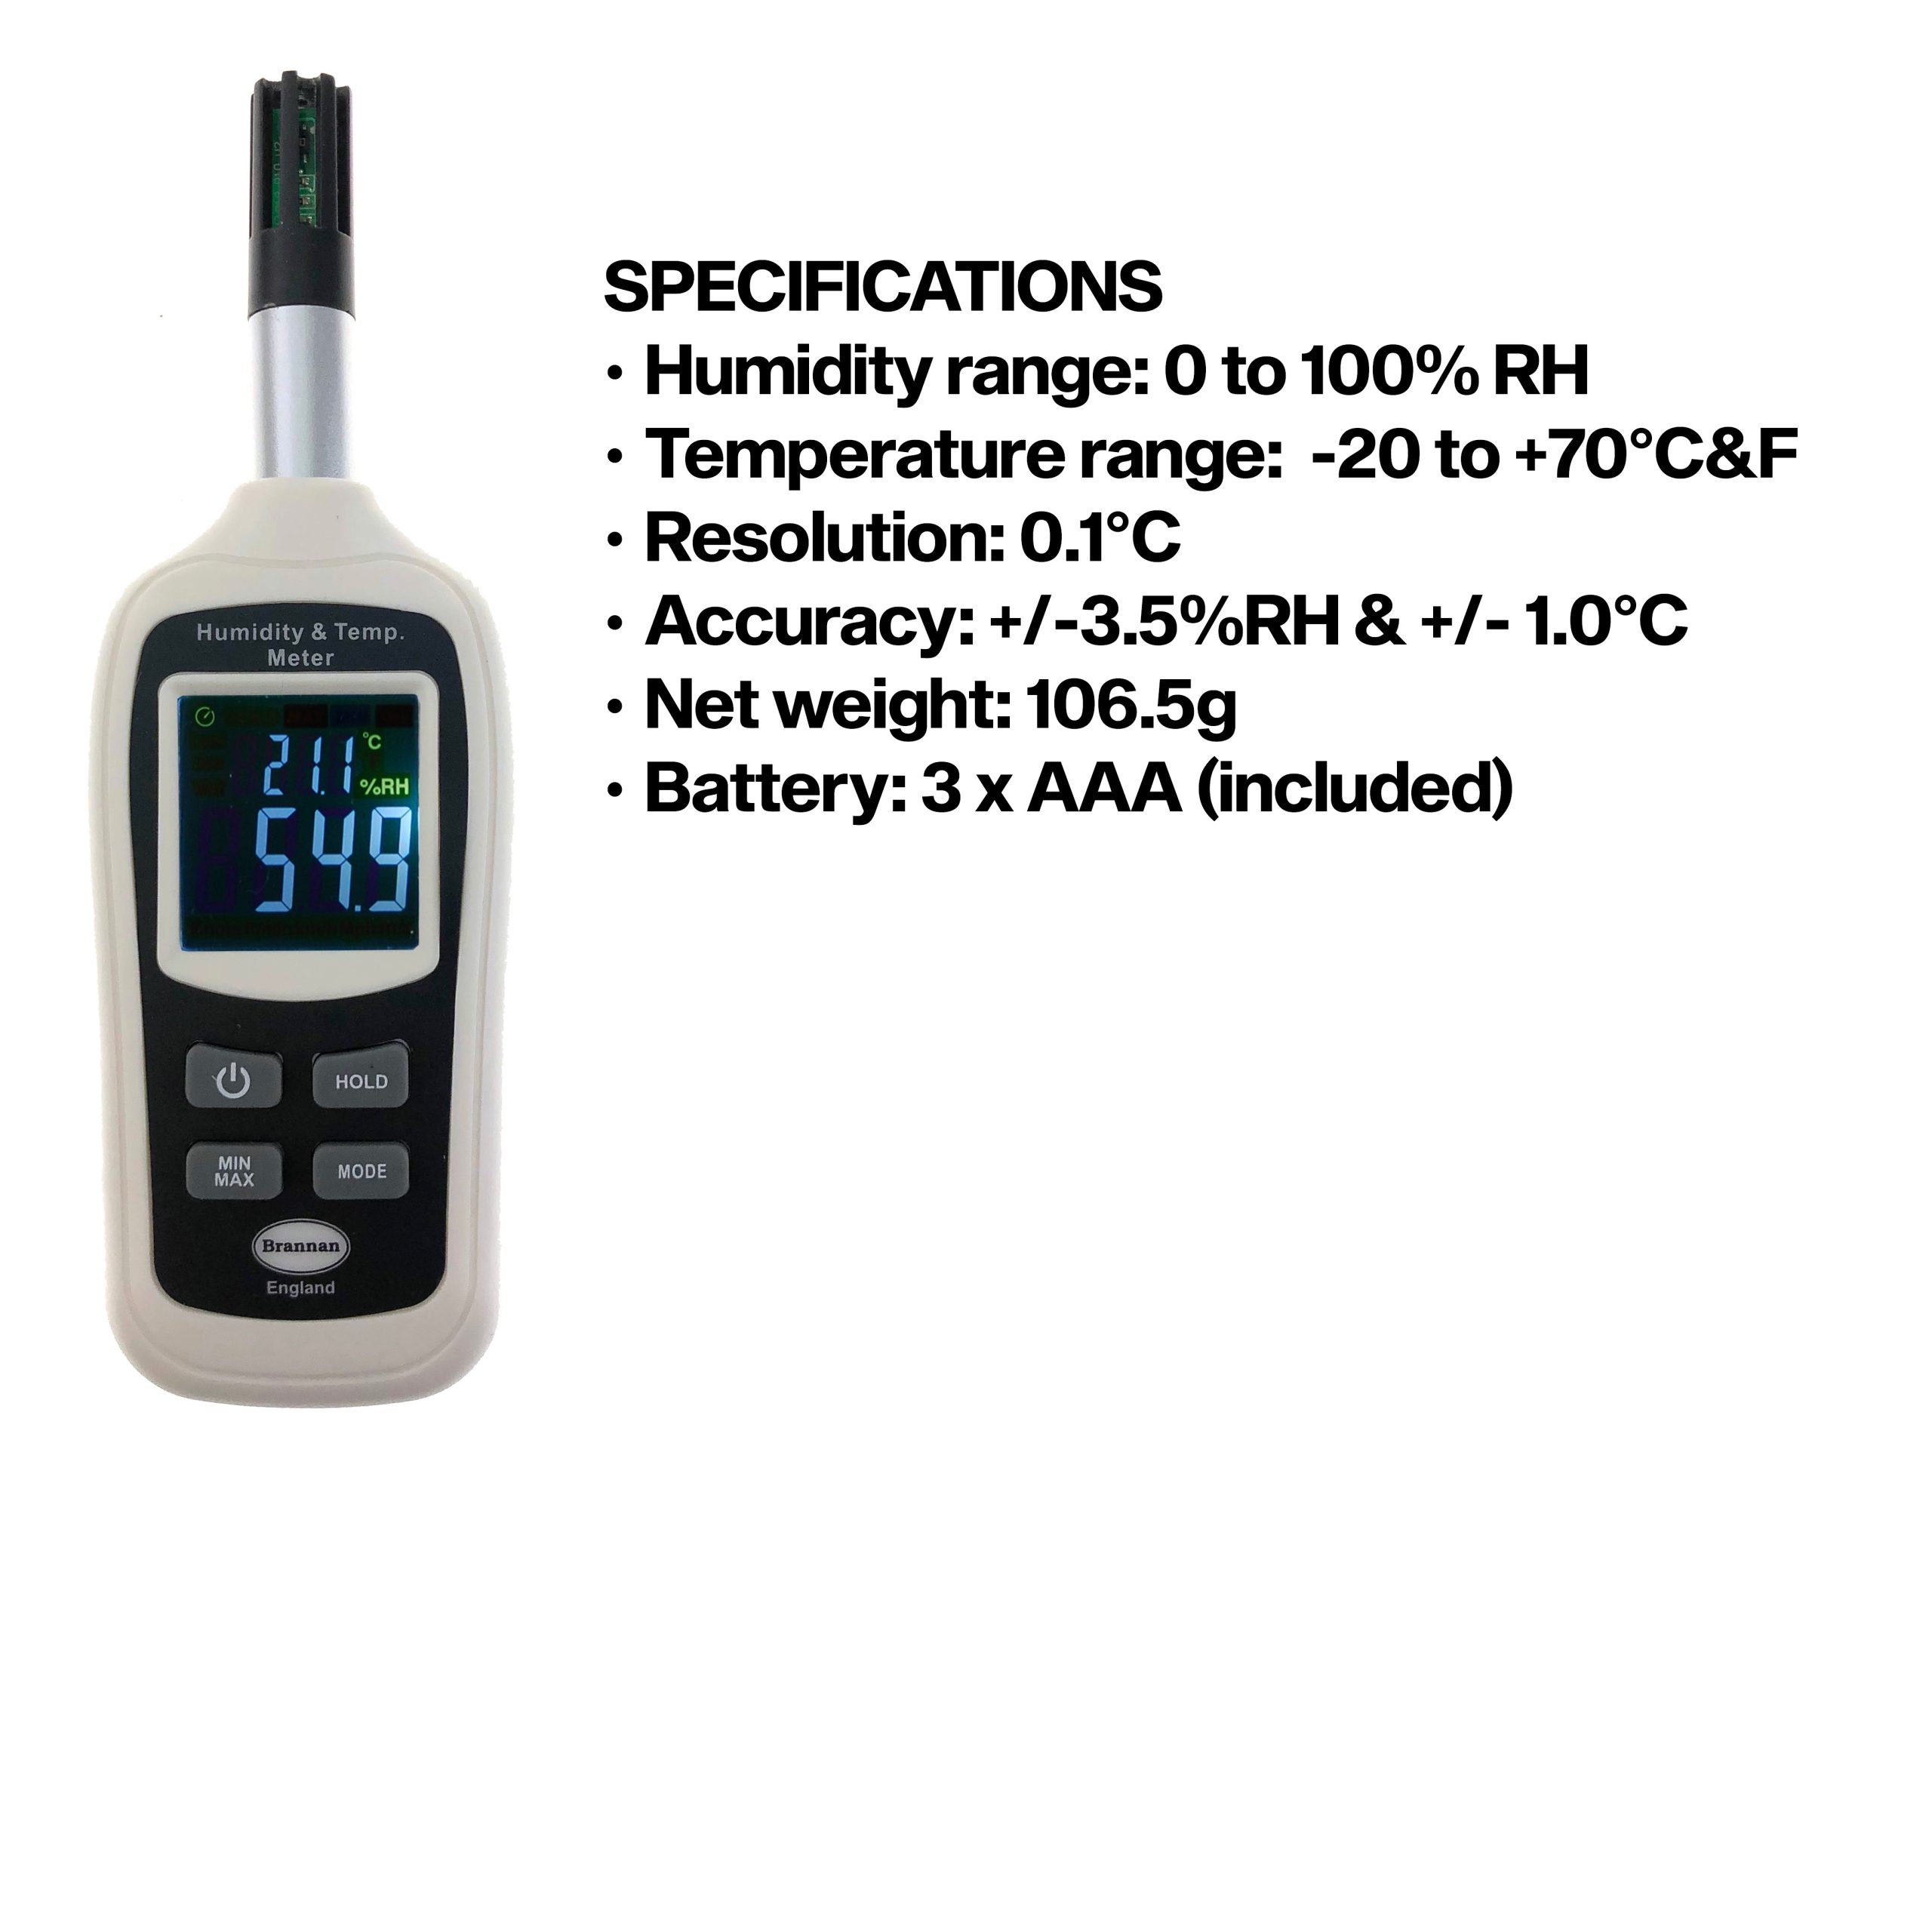 Mini thermo-humidity meter